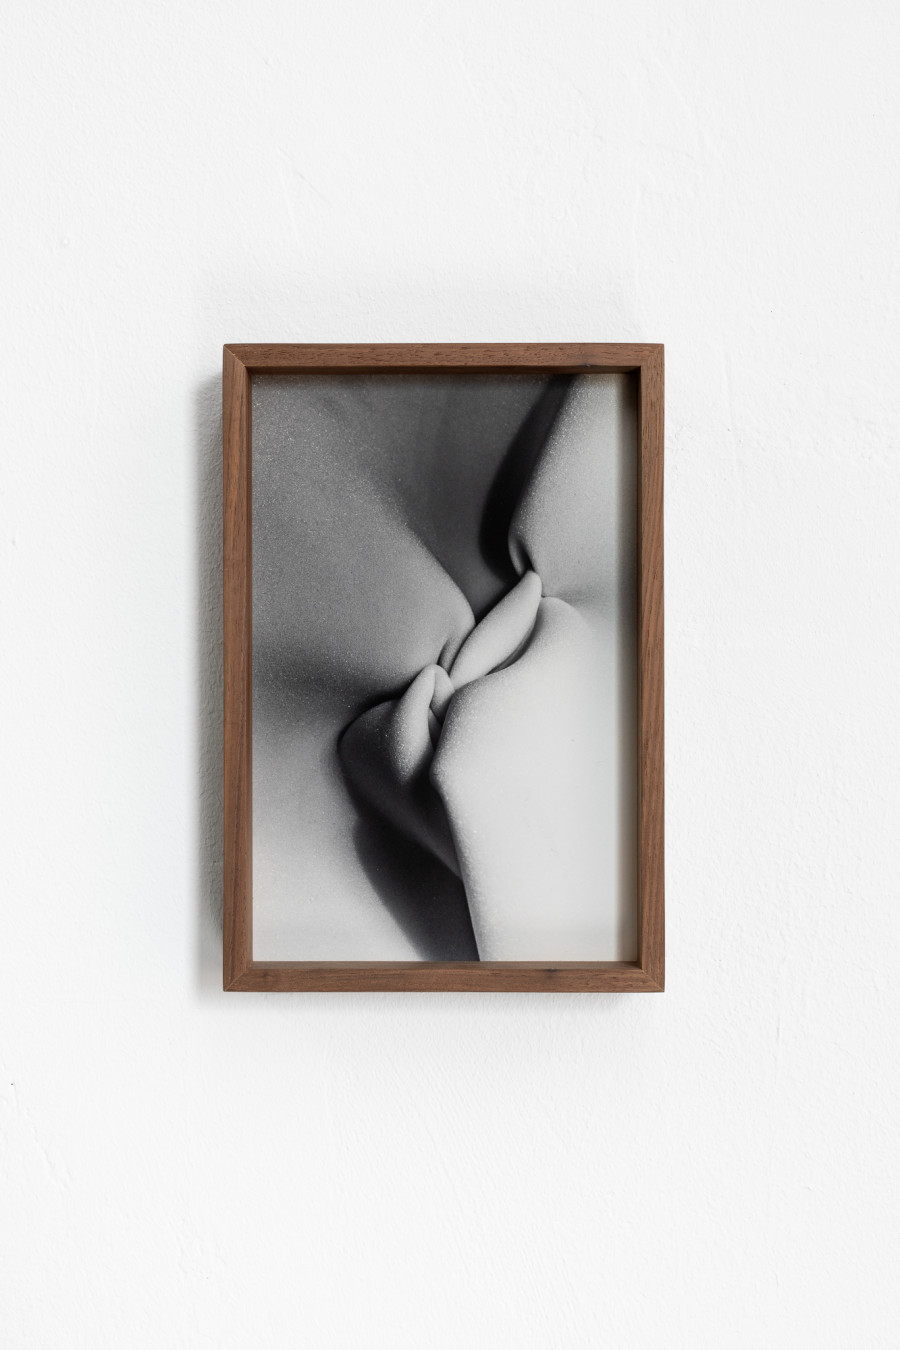 Martín Soto Climént, Marea de espuma, 2015, piezography on Hahnemühle Photo Rag Ultra Smooth 100% Cotton paper and walnut wood, 31.5 x 21.5 x 6 cm. Photo: Kilian Bannwart